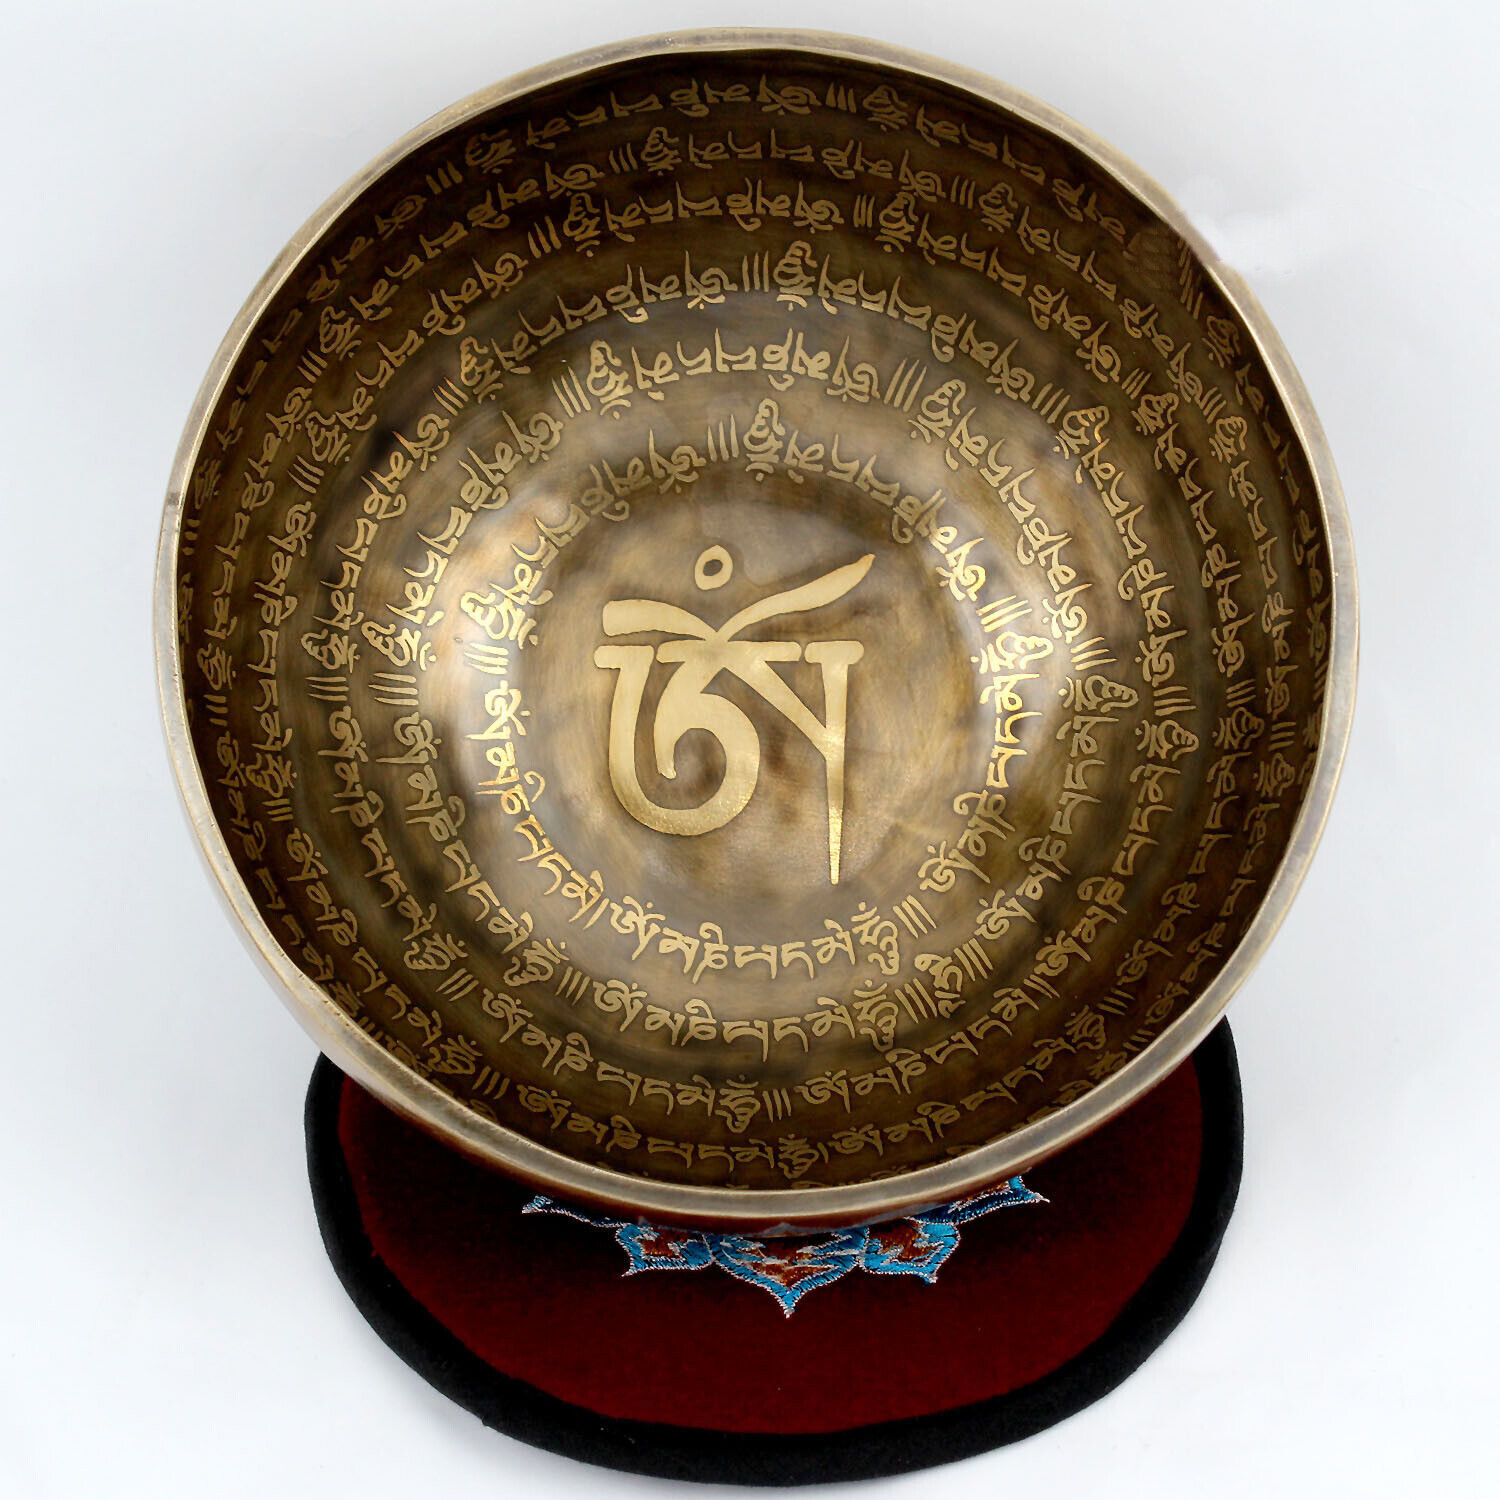 20 cm Tibetan Mantra Carved singing Bowls - 8 inches Healing meditation Bowls